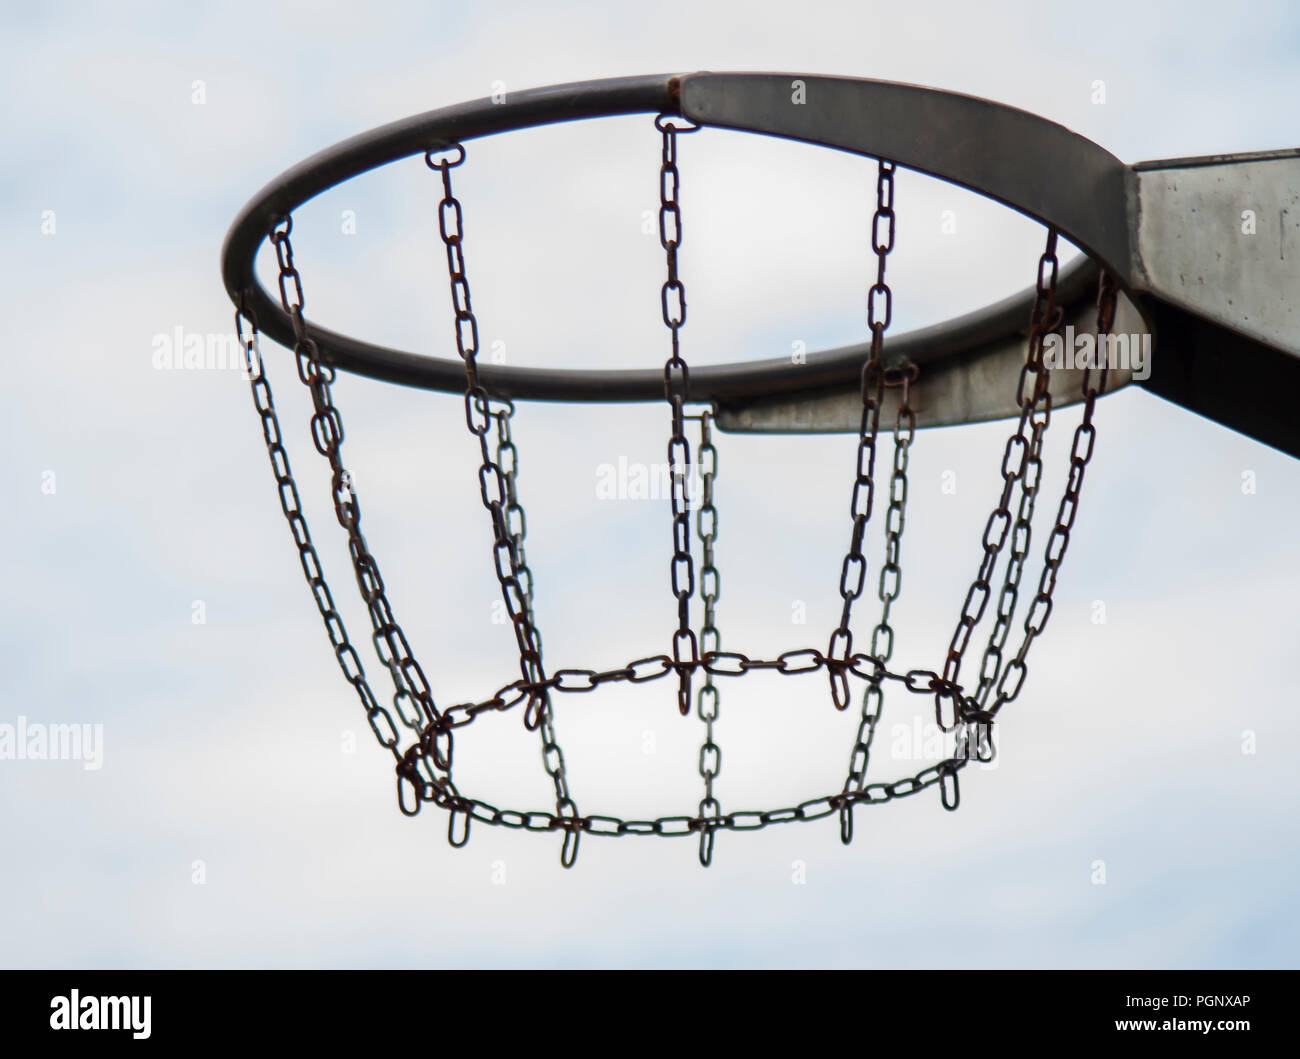 Metal basketball hoop with chain net sky background Stock Photo - Alamy